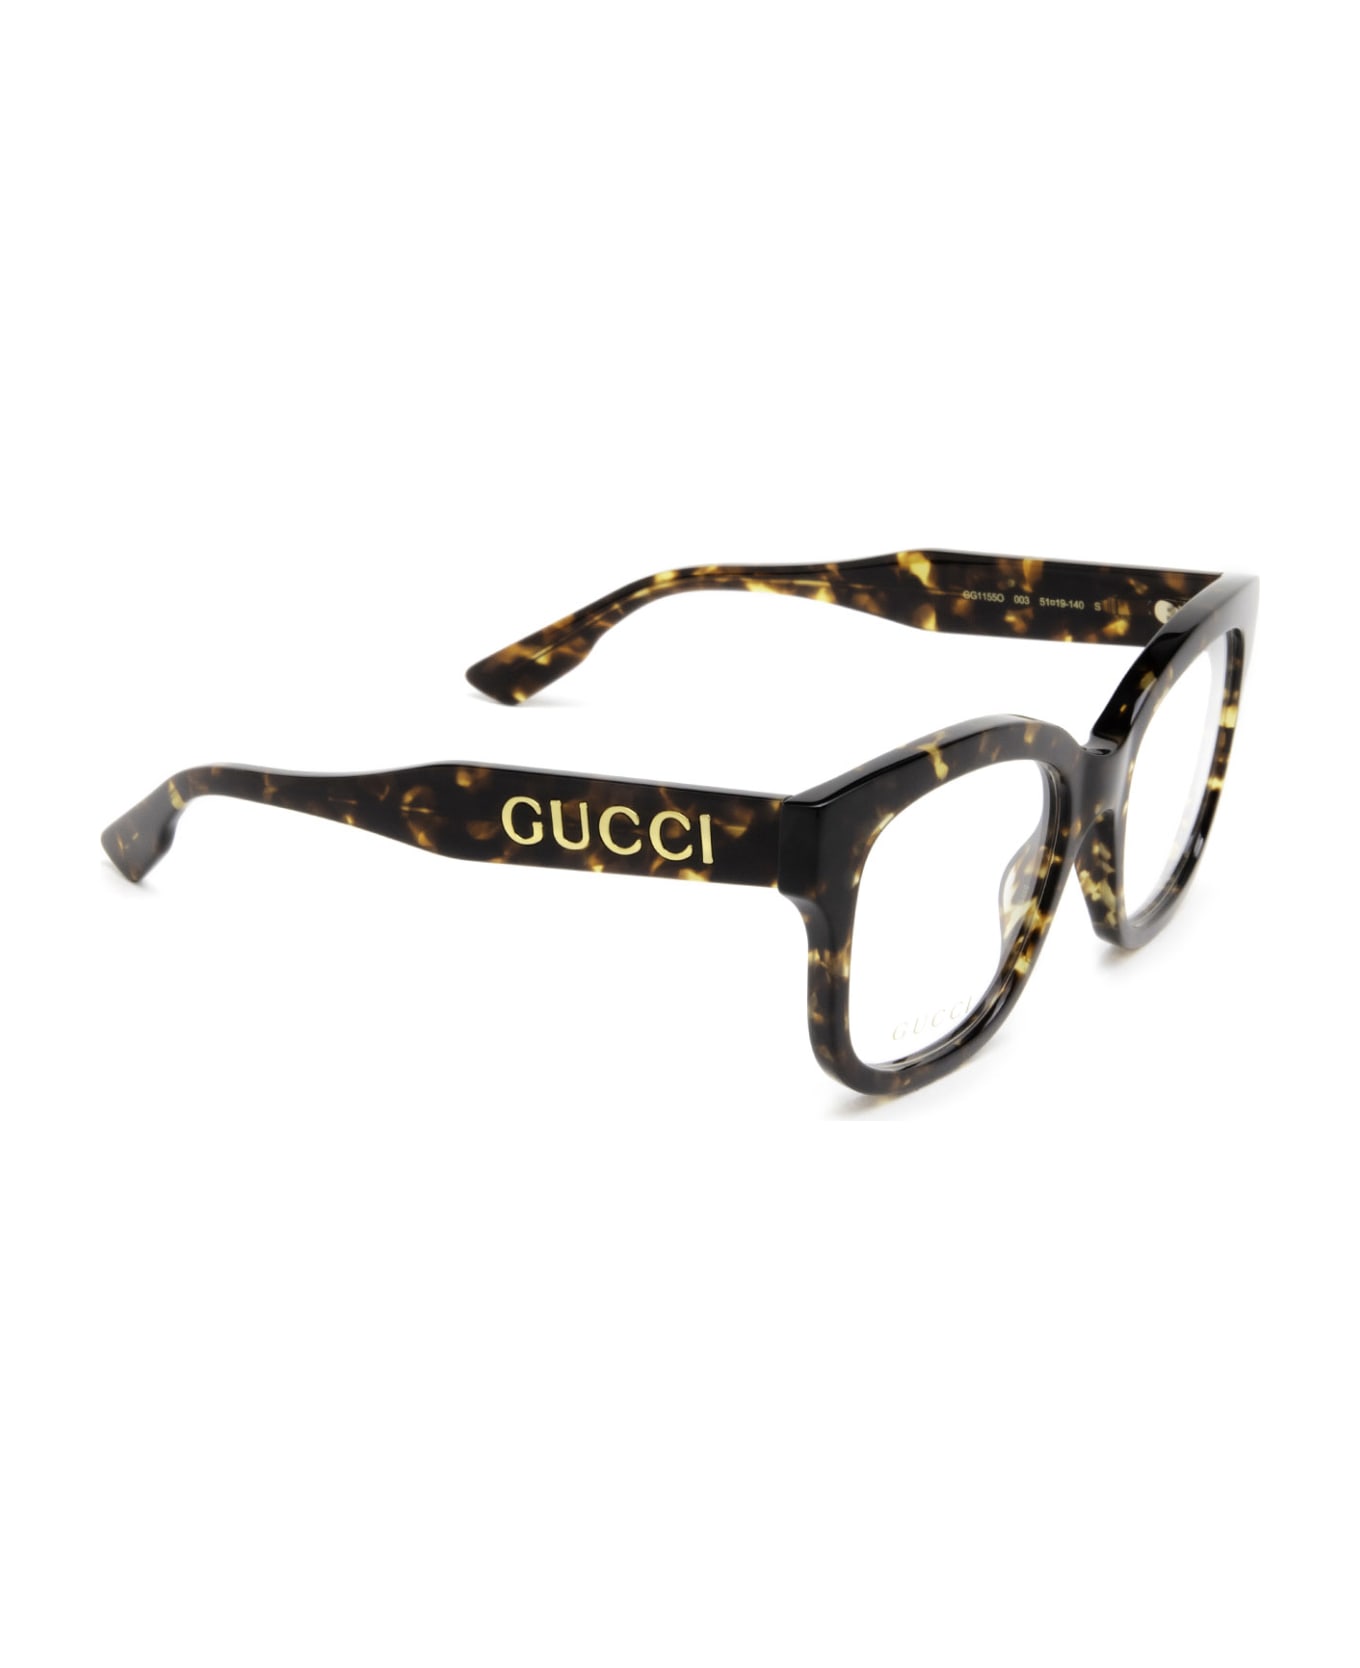 Gucci Eyewear Gg1155o Havana Glasses - Havana